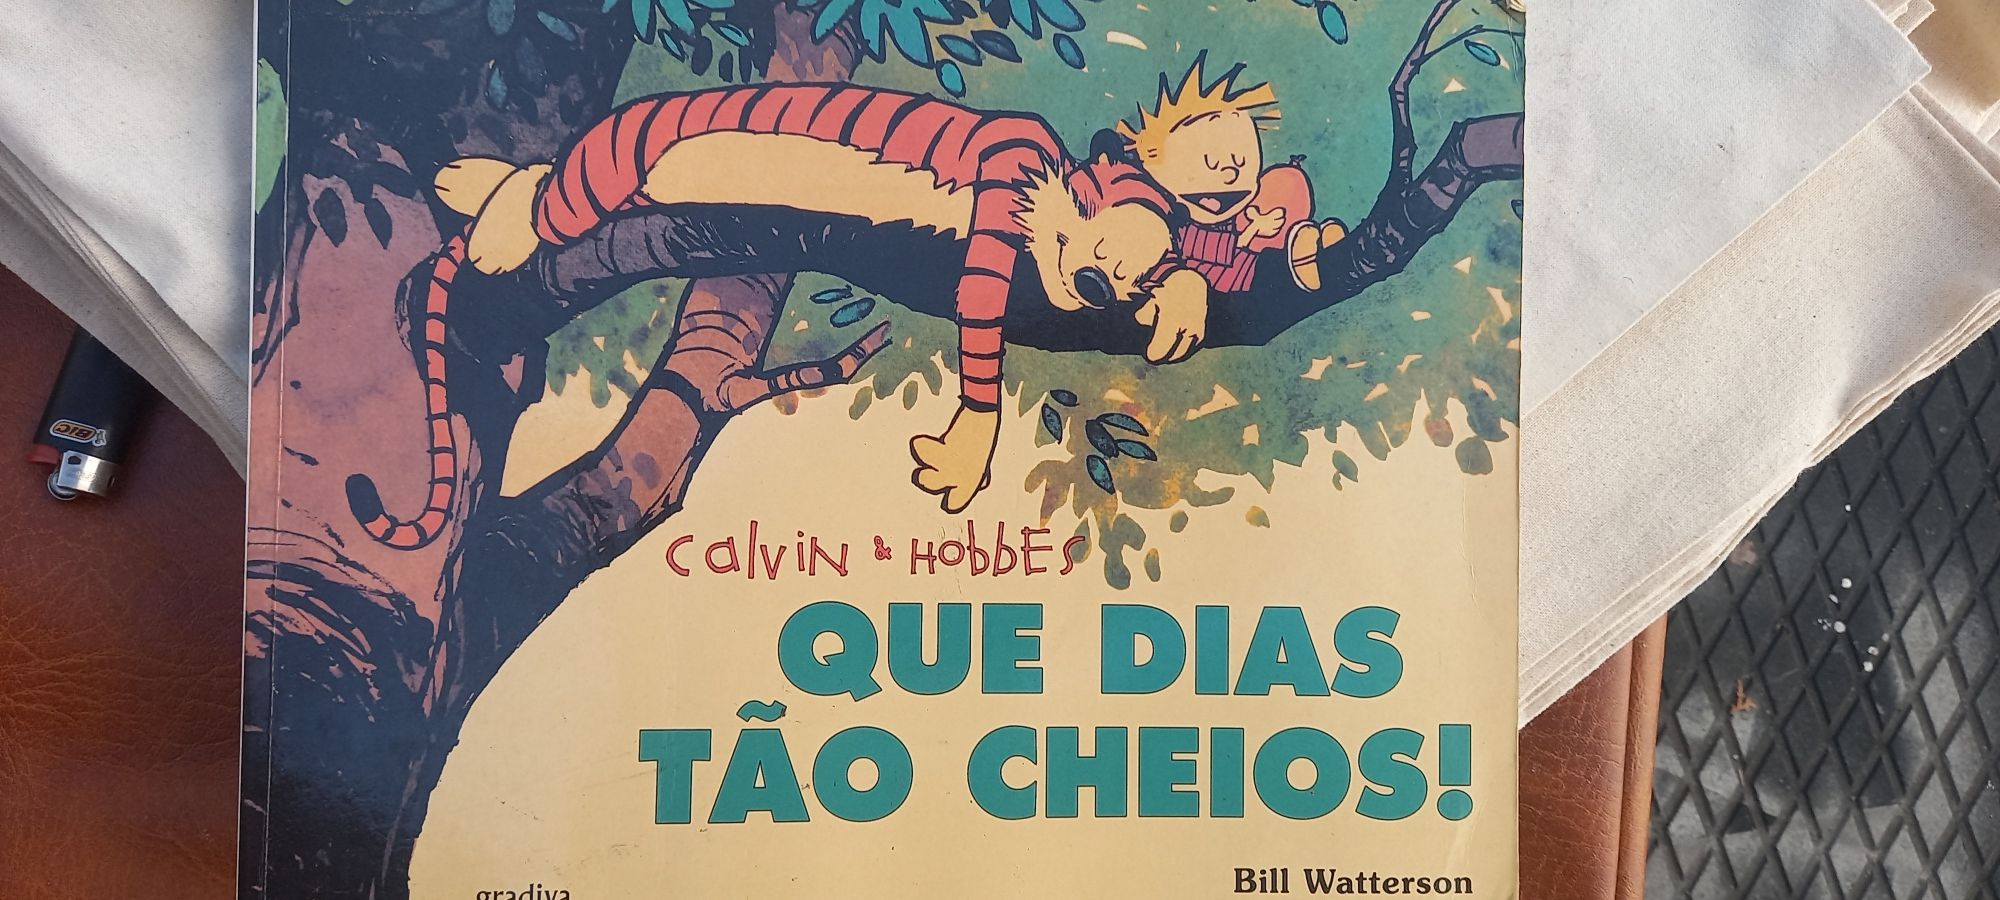 Calvin & hobbes 2 livros